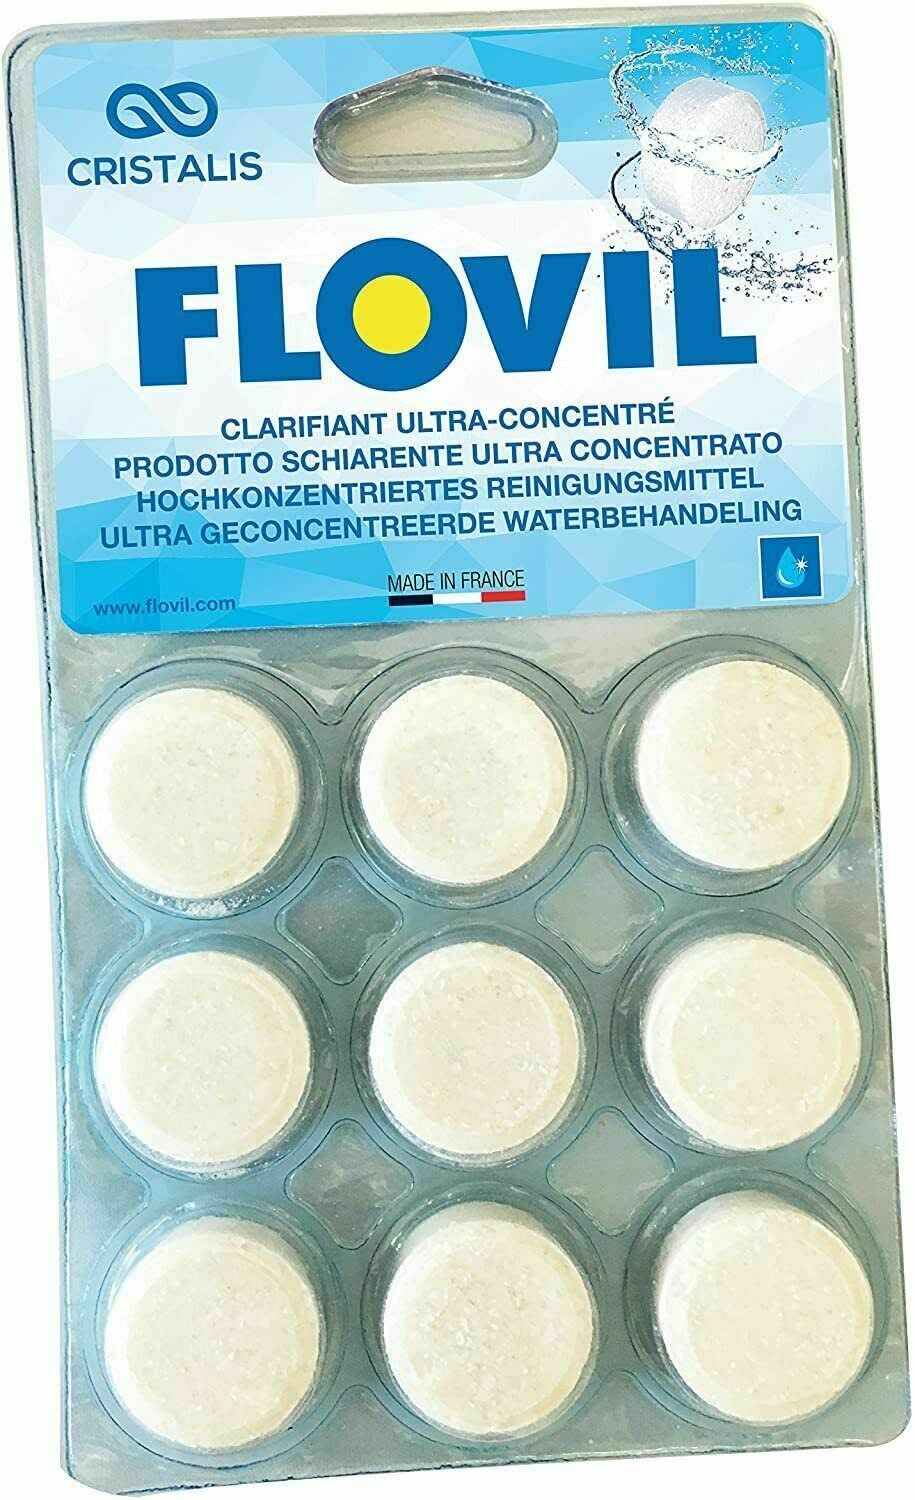 Astralpool - Flovil Floculant clarifiant - Blister de 9 pastilles